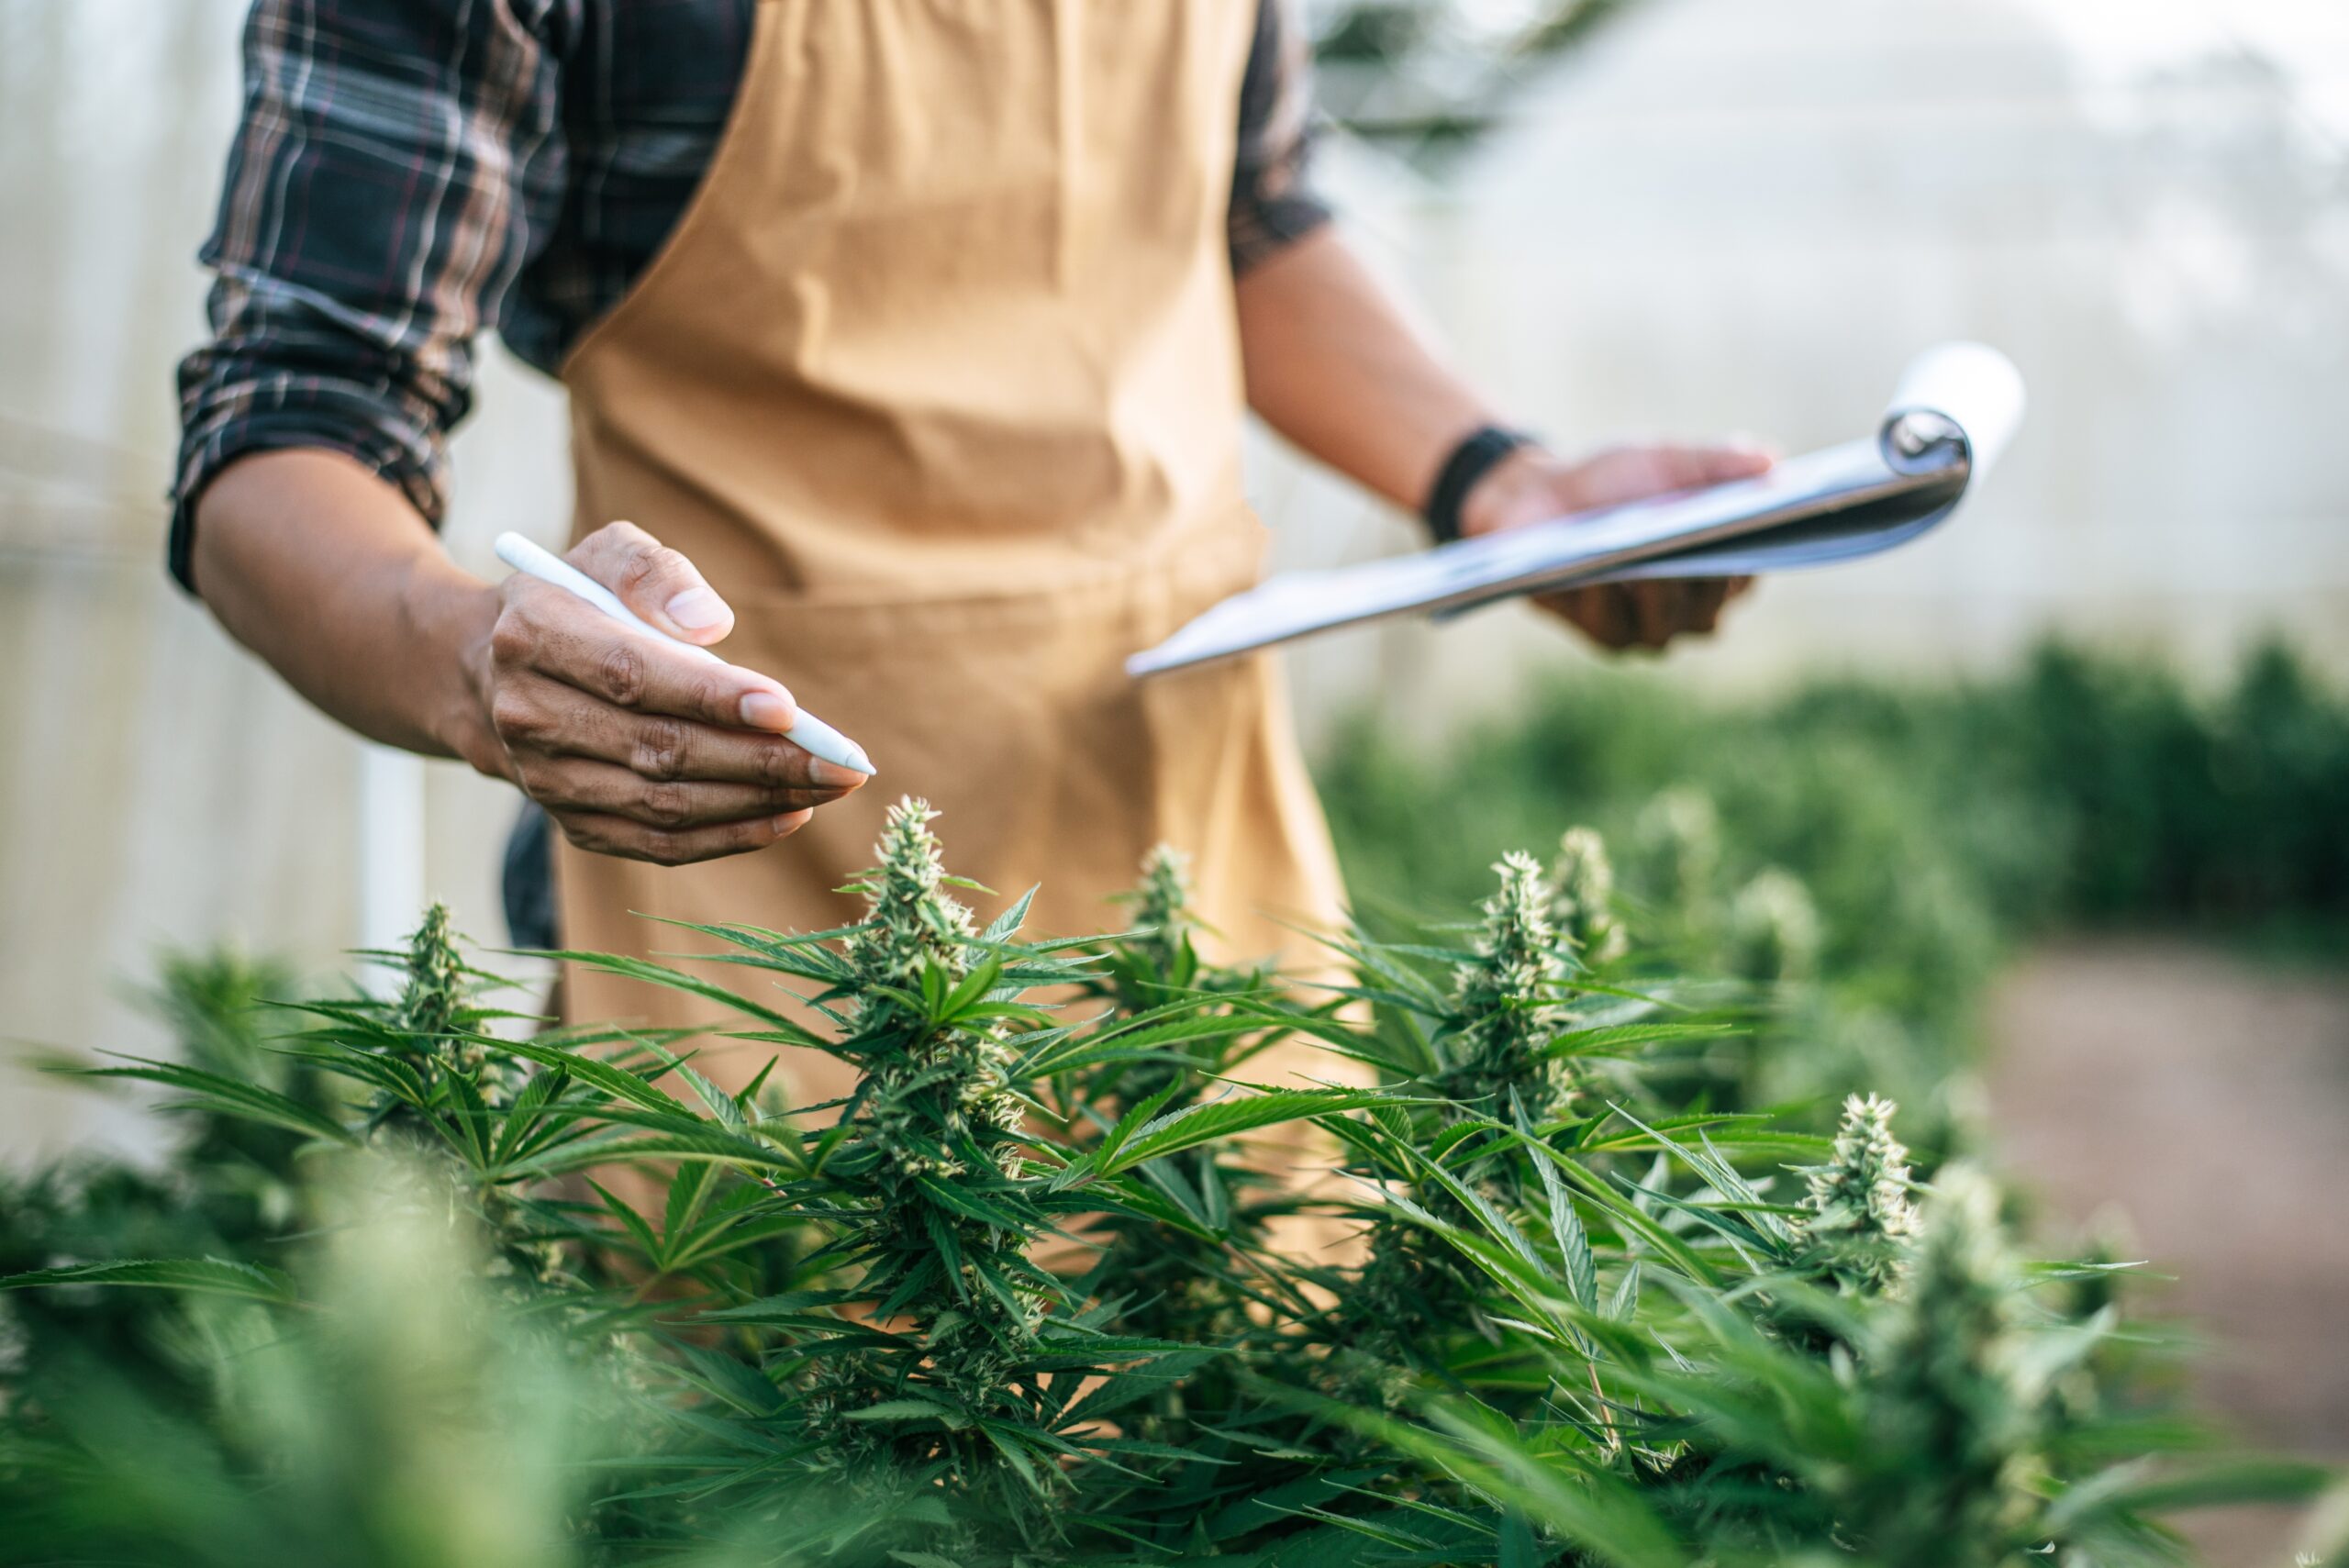 employee examining cannabis plants